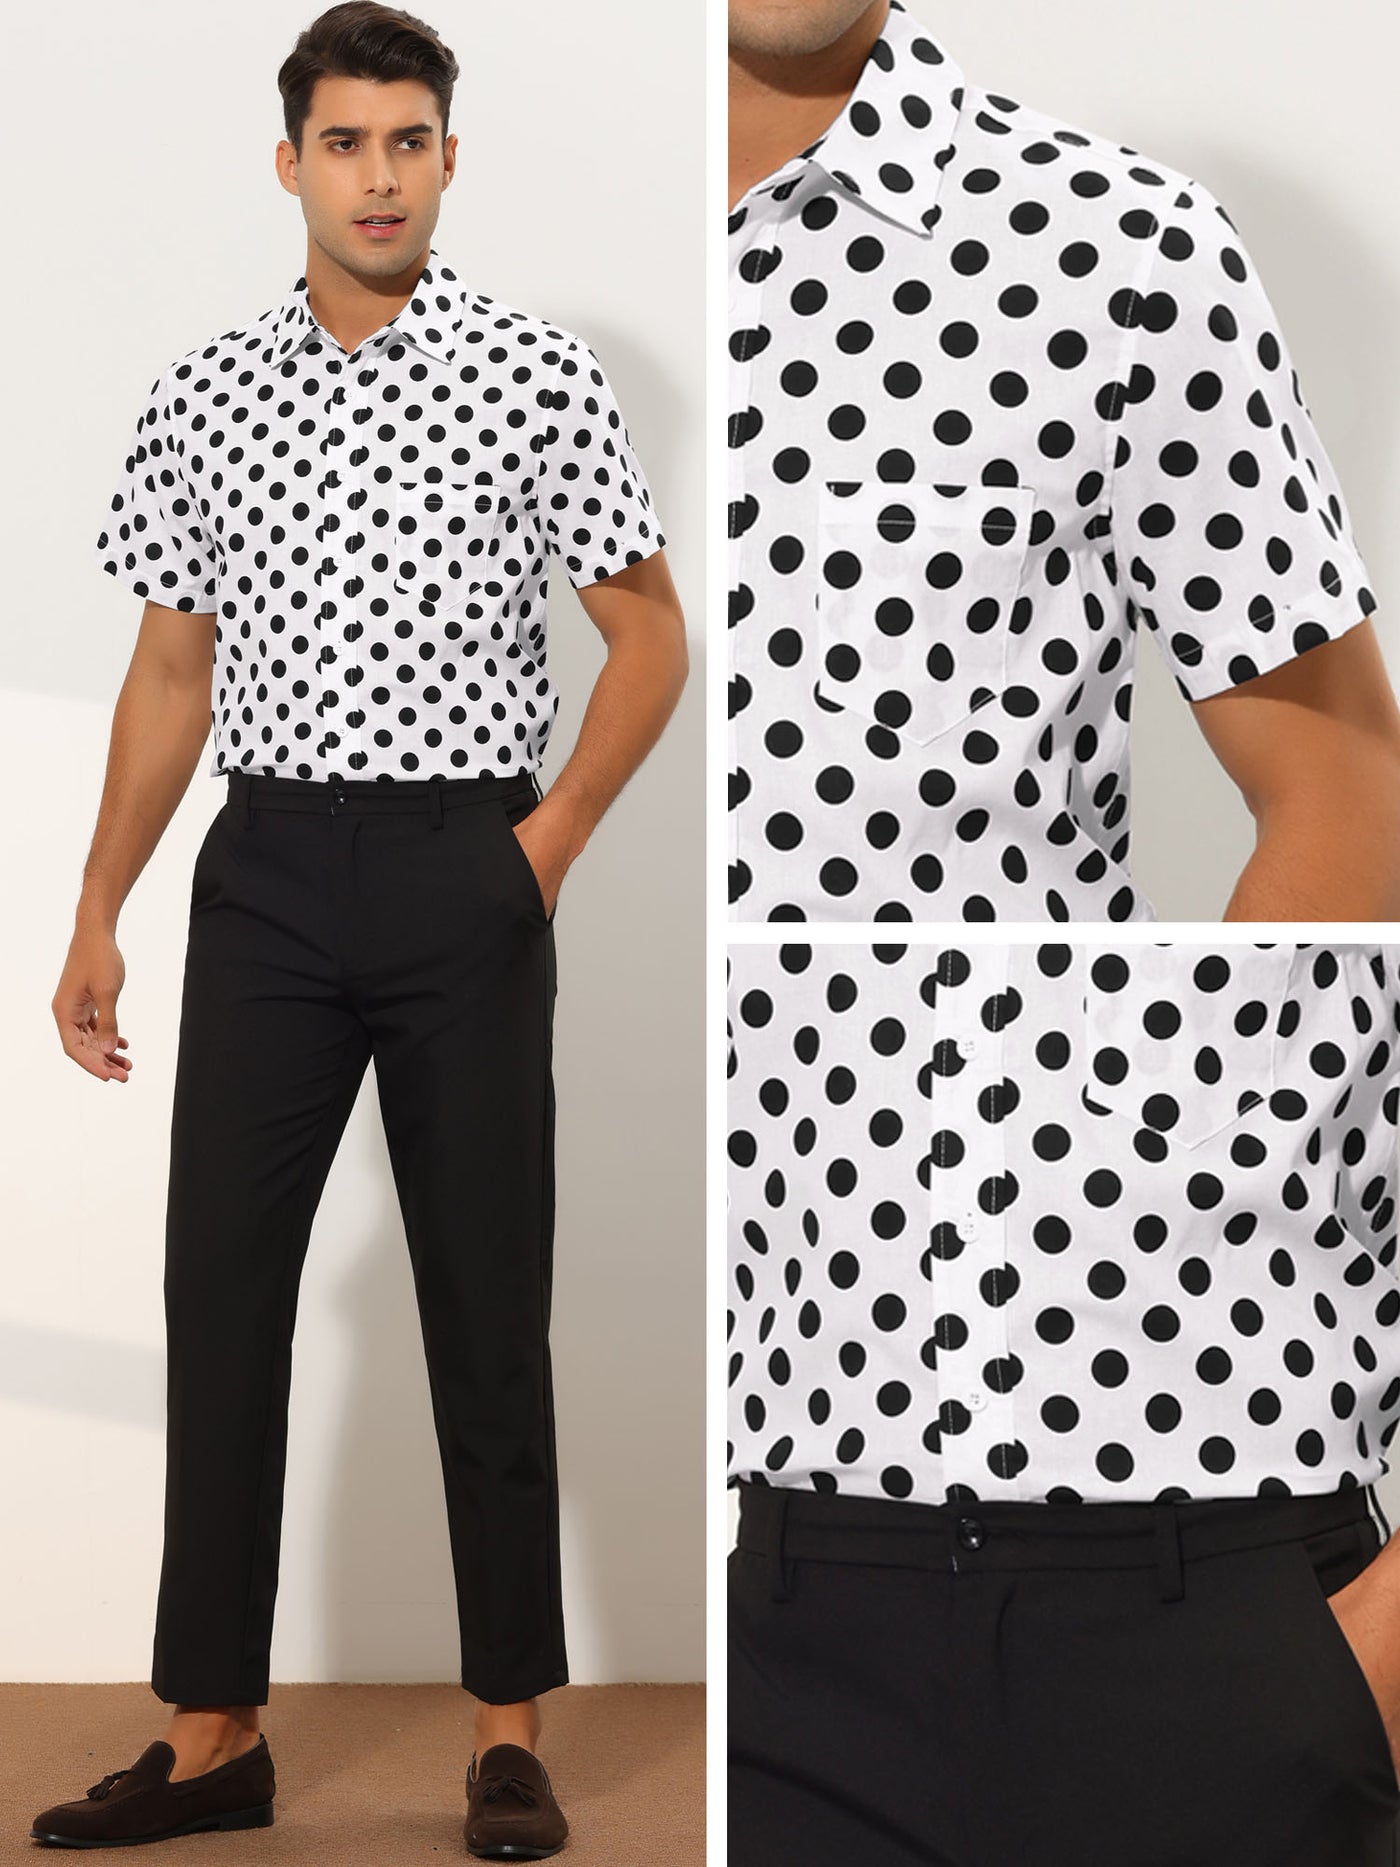 Bublédon Men's Slim Fit Polka Dots Button Short Sleeves Dress Shirts